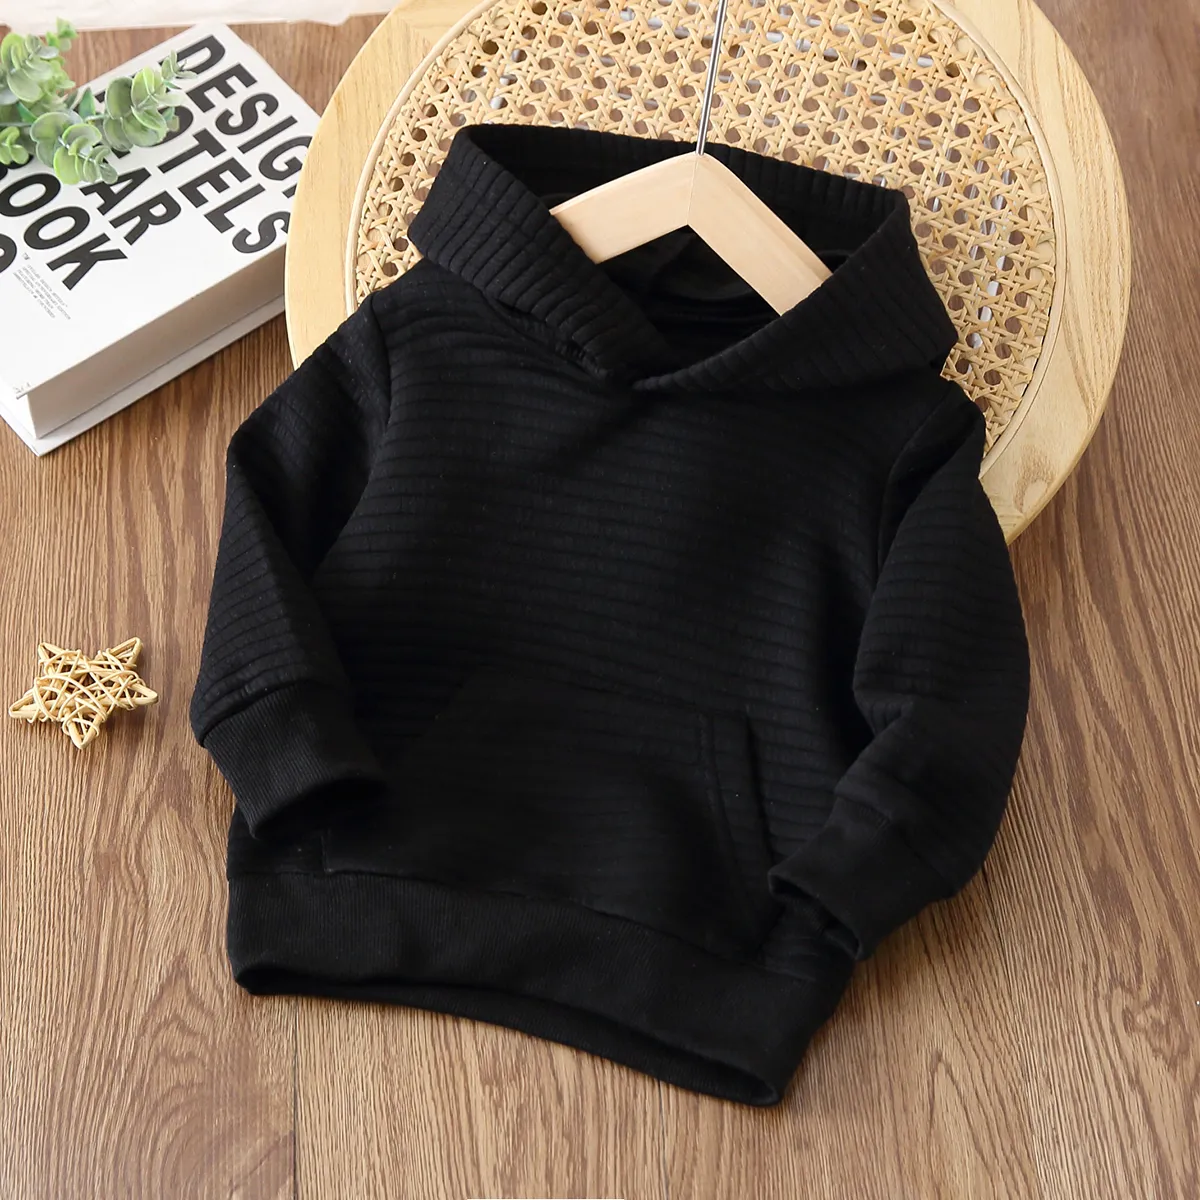 Toddler Boy/Girl Solid Color Textured Hoodie Sweatshirt